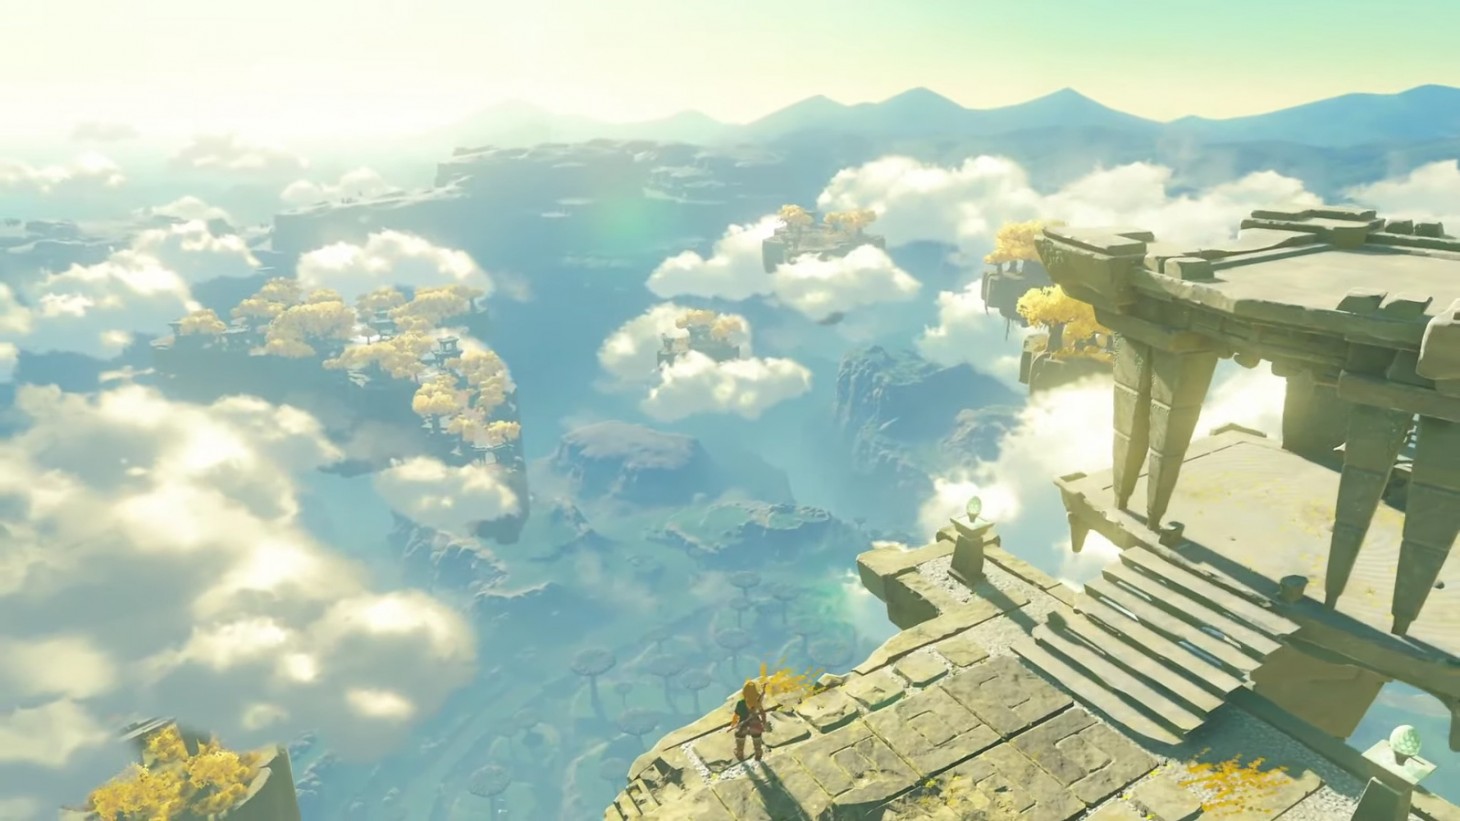 New Zelda game: Crazy theories of Breath of the Wild